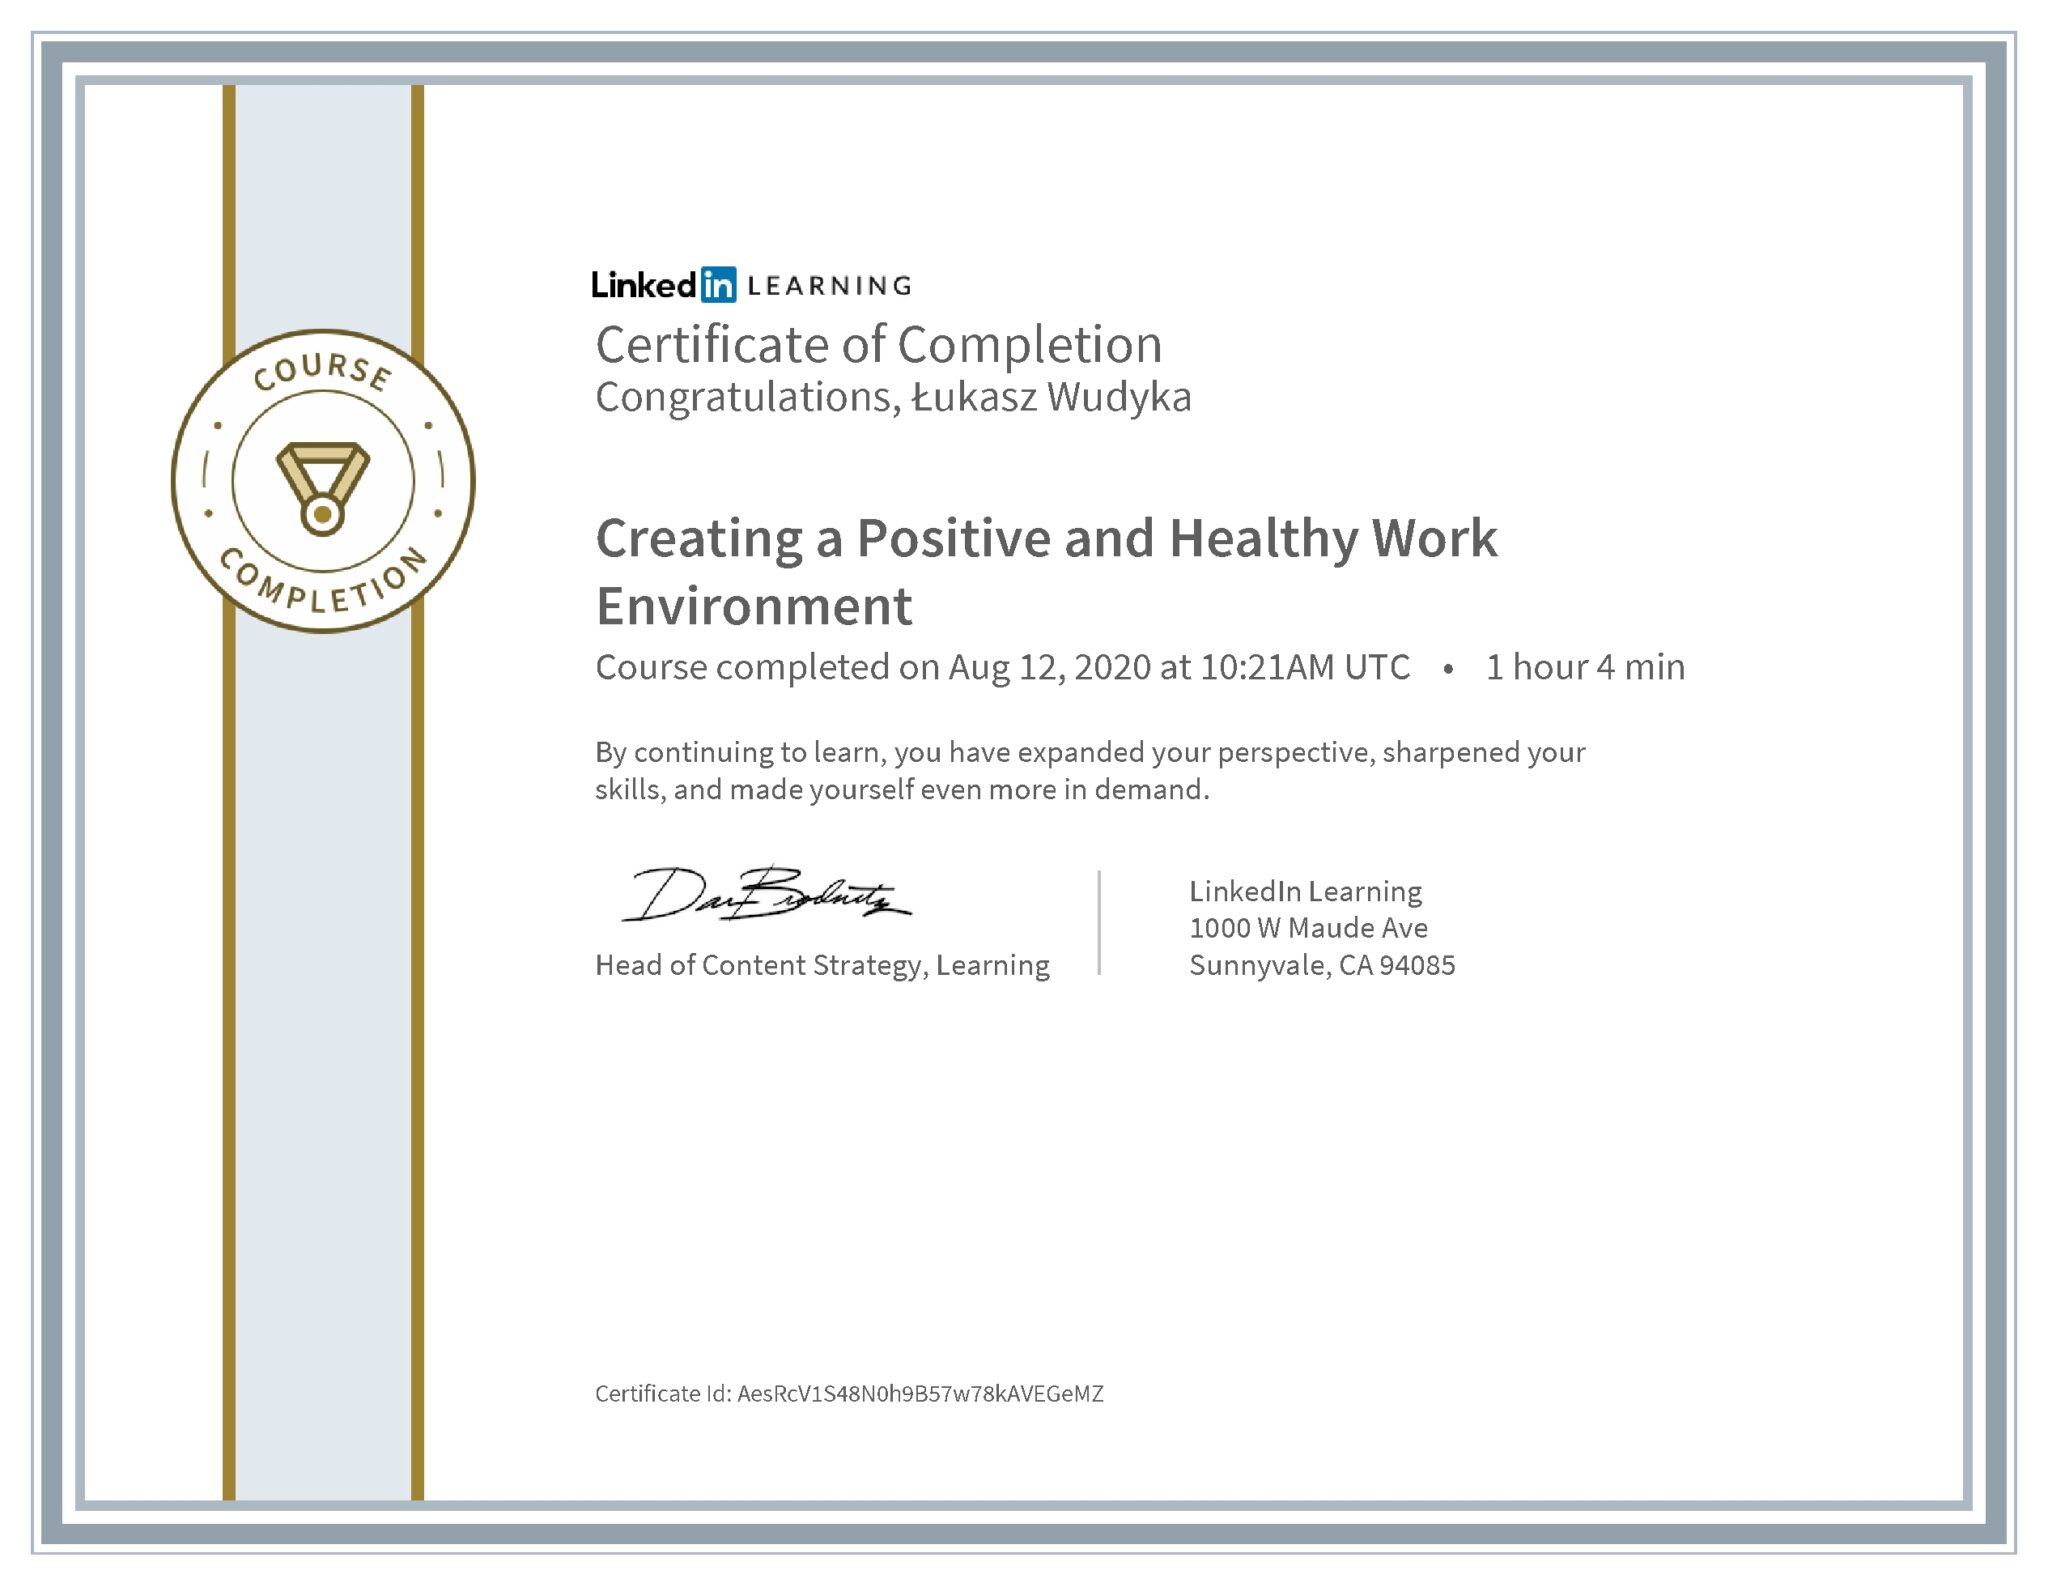 Łukasz Wudyka certyfikat LinkedIn Creating a Positive and Healthy Work Environment